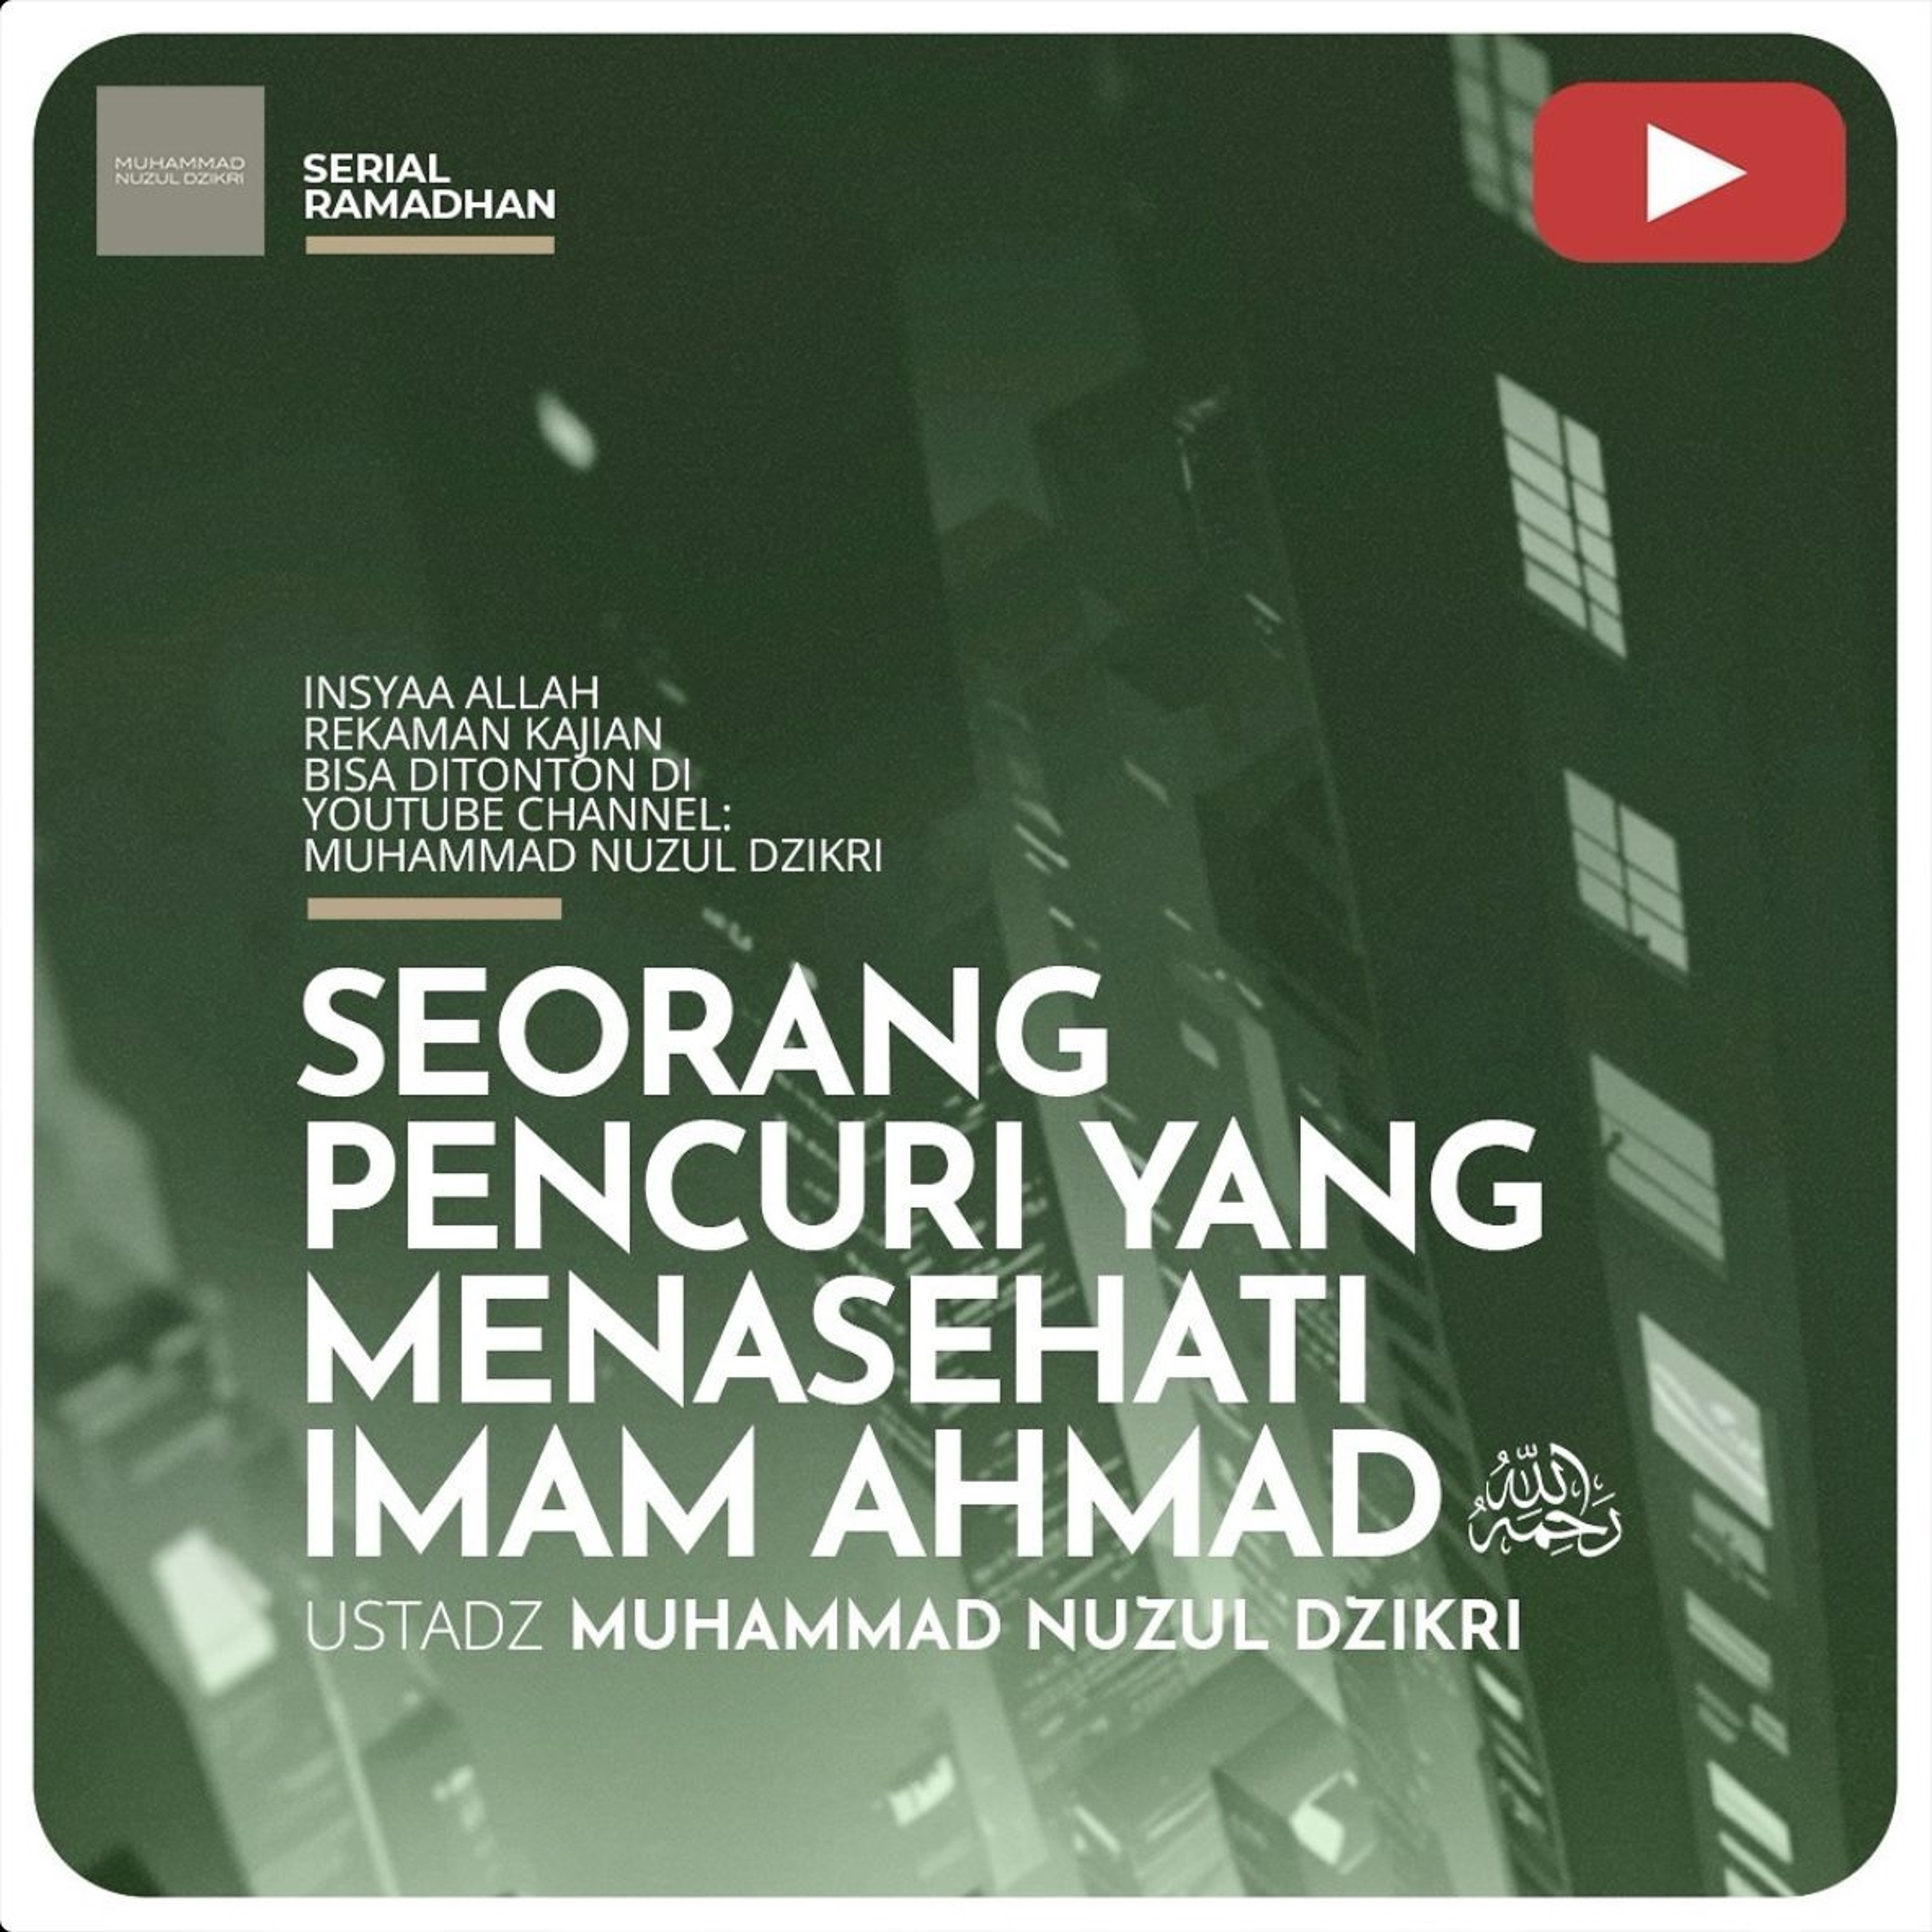 Serial Ramadhan 26. ”SEORANG PENCURI YANG MENASEHATI IMAM AHMAD” - Ustadz Muhammad Nuzul Dzikri